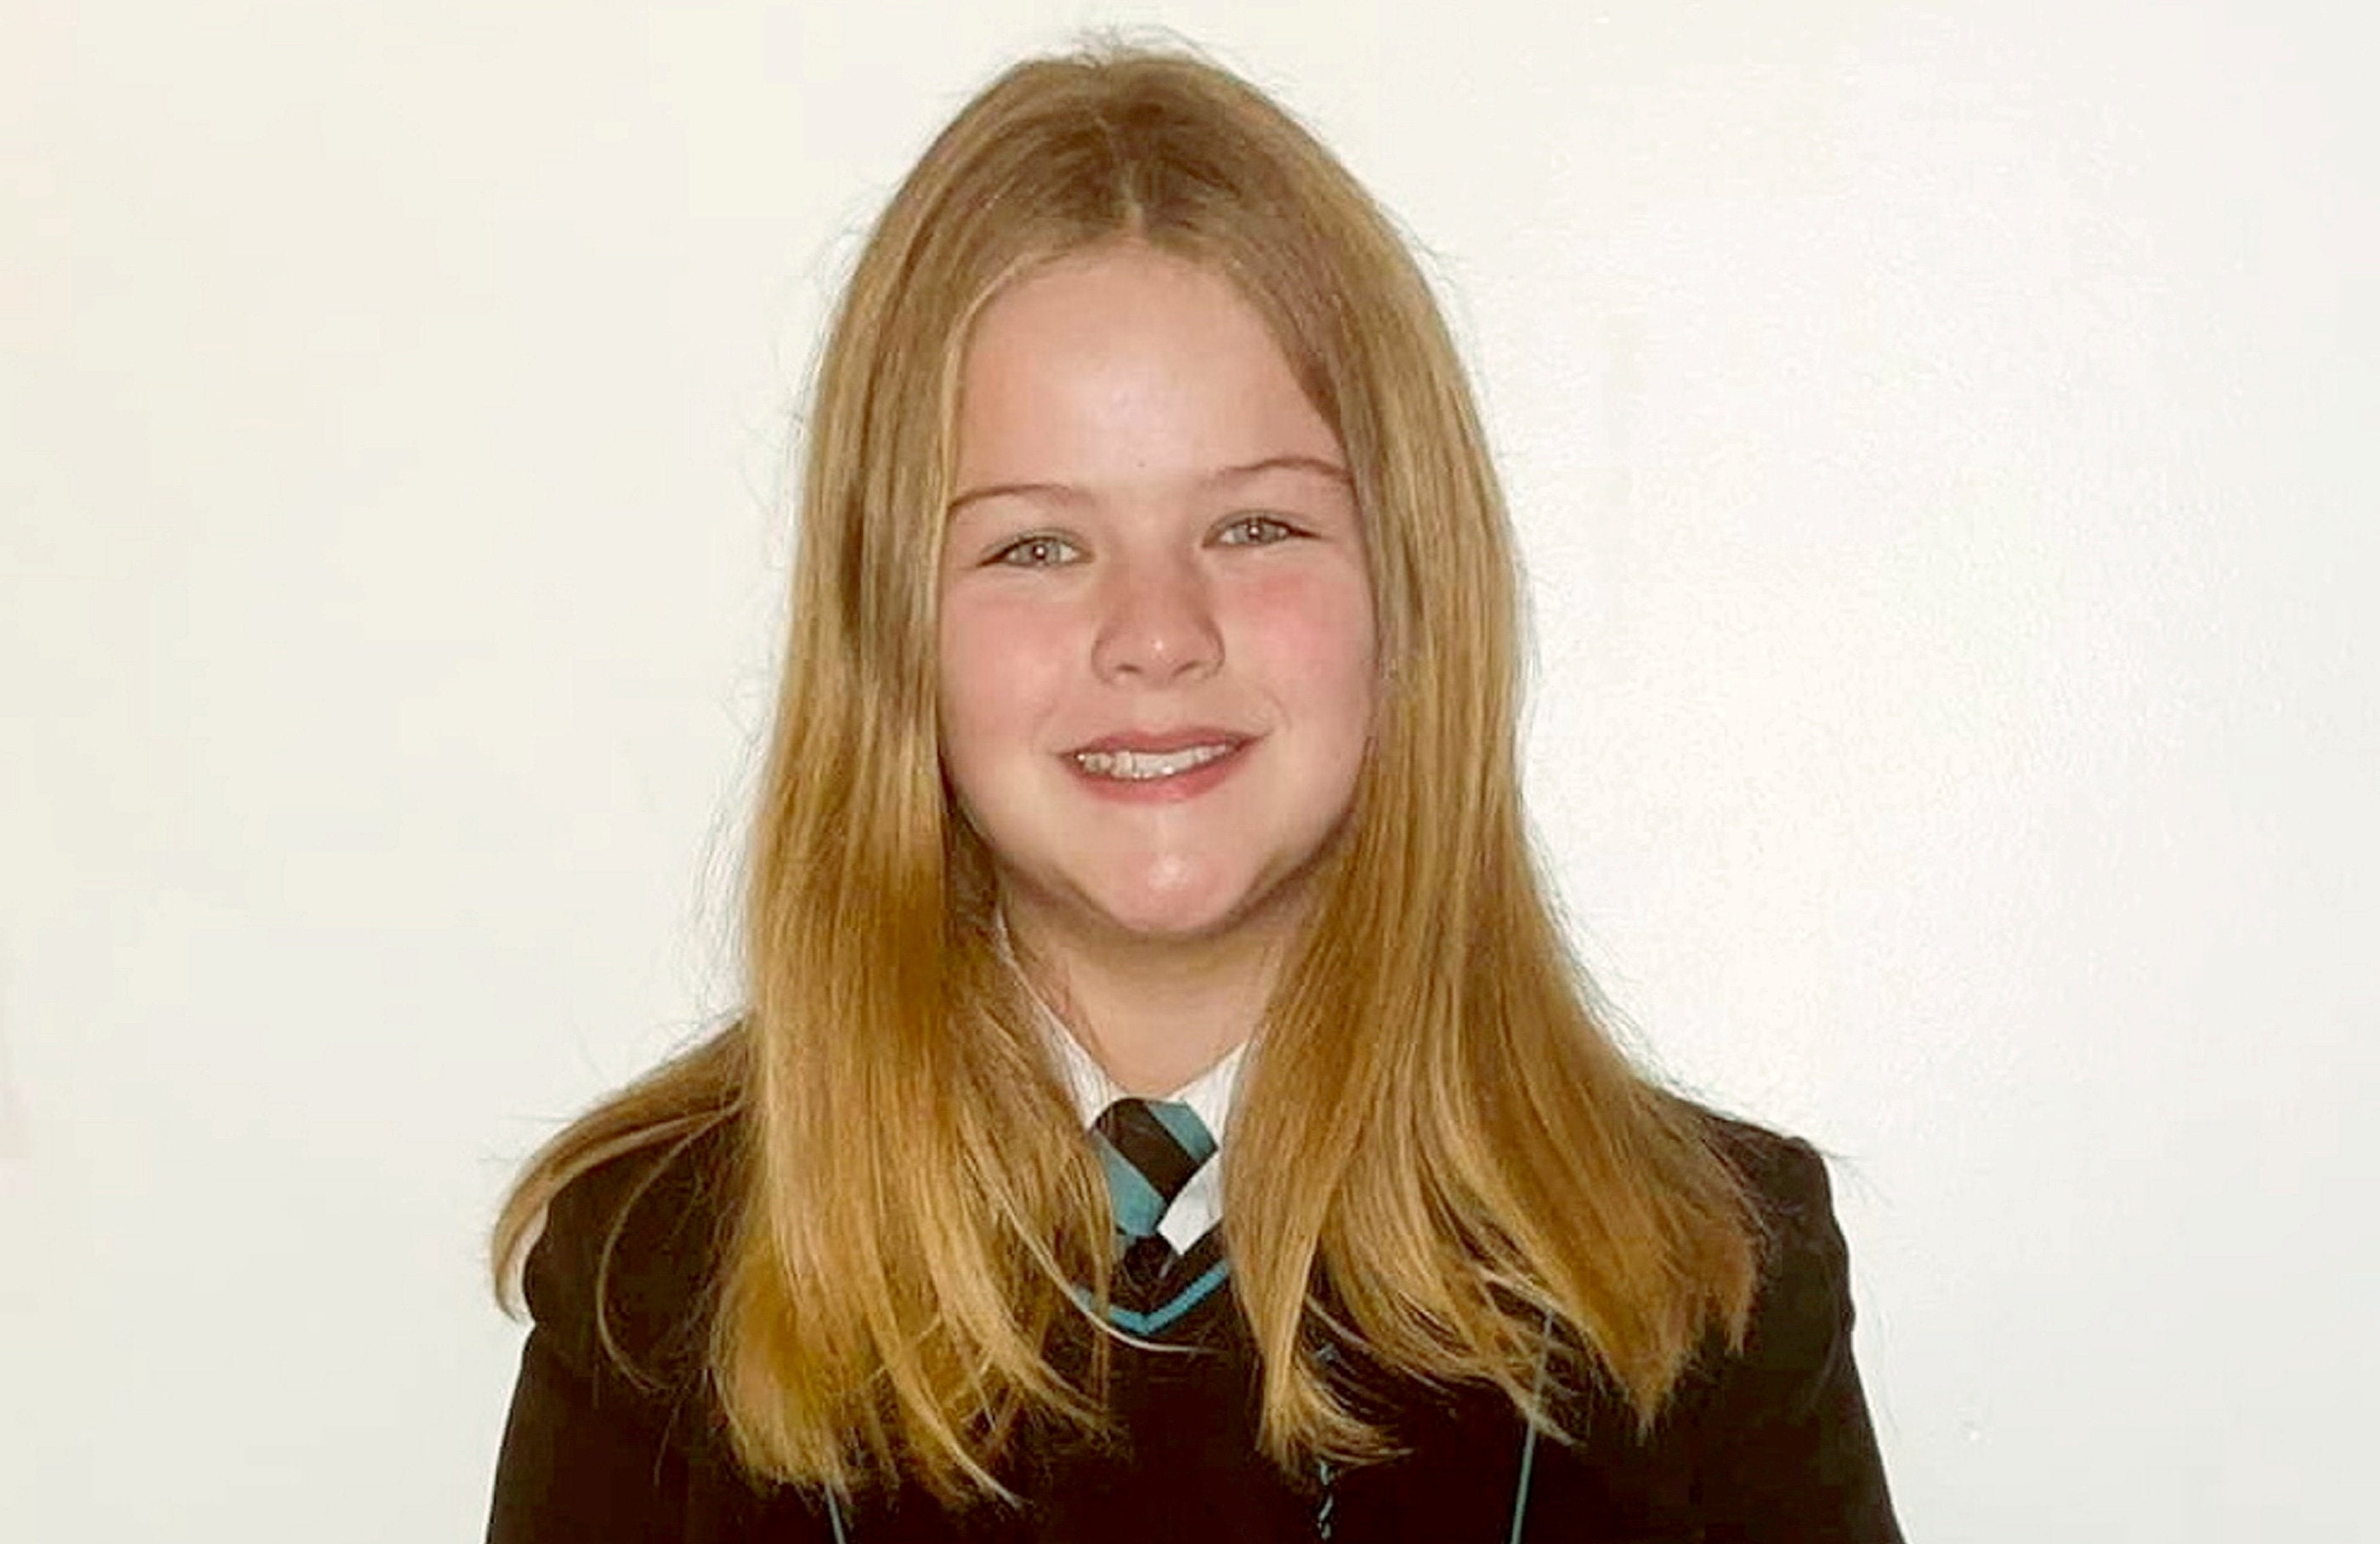 Ruby Reid, 12, in her school uniform.